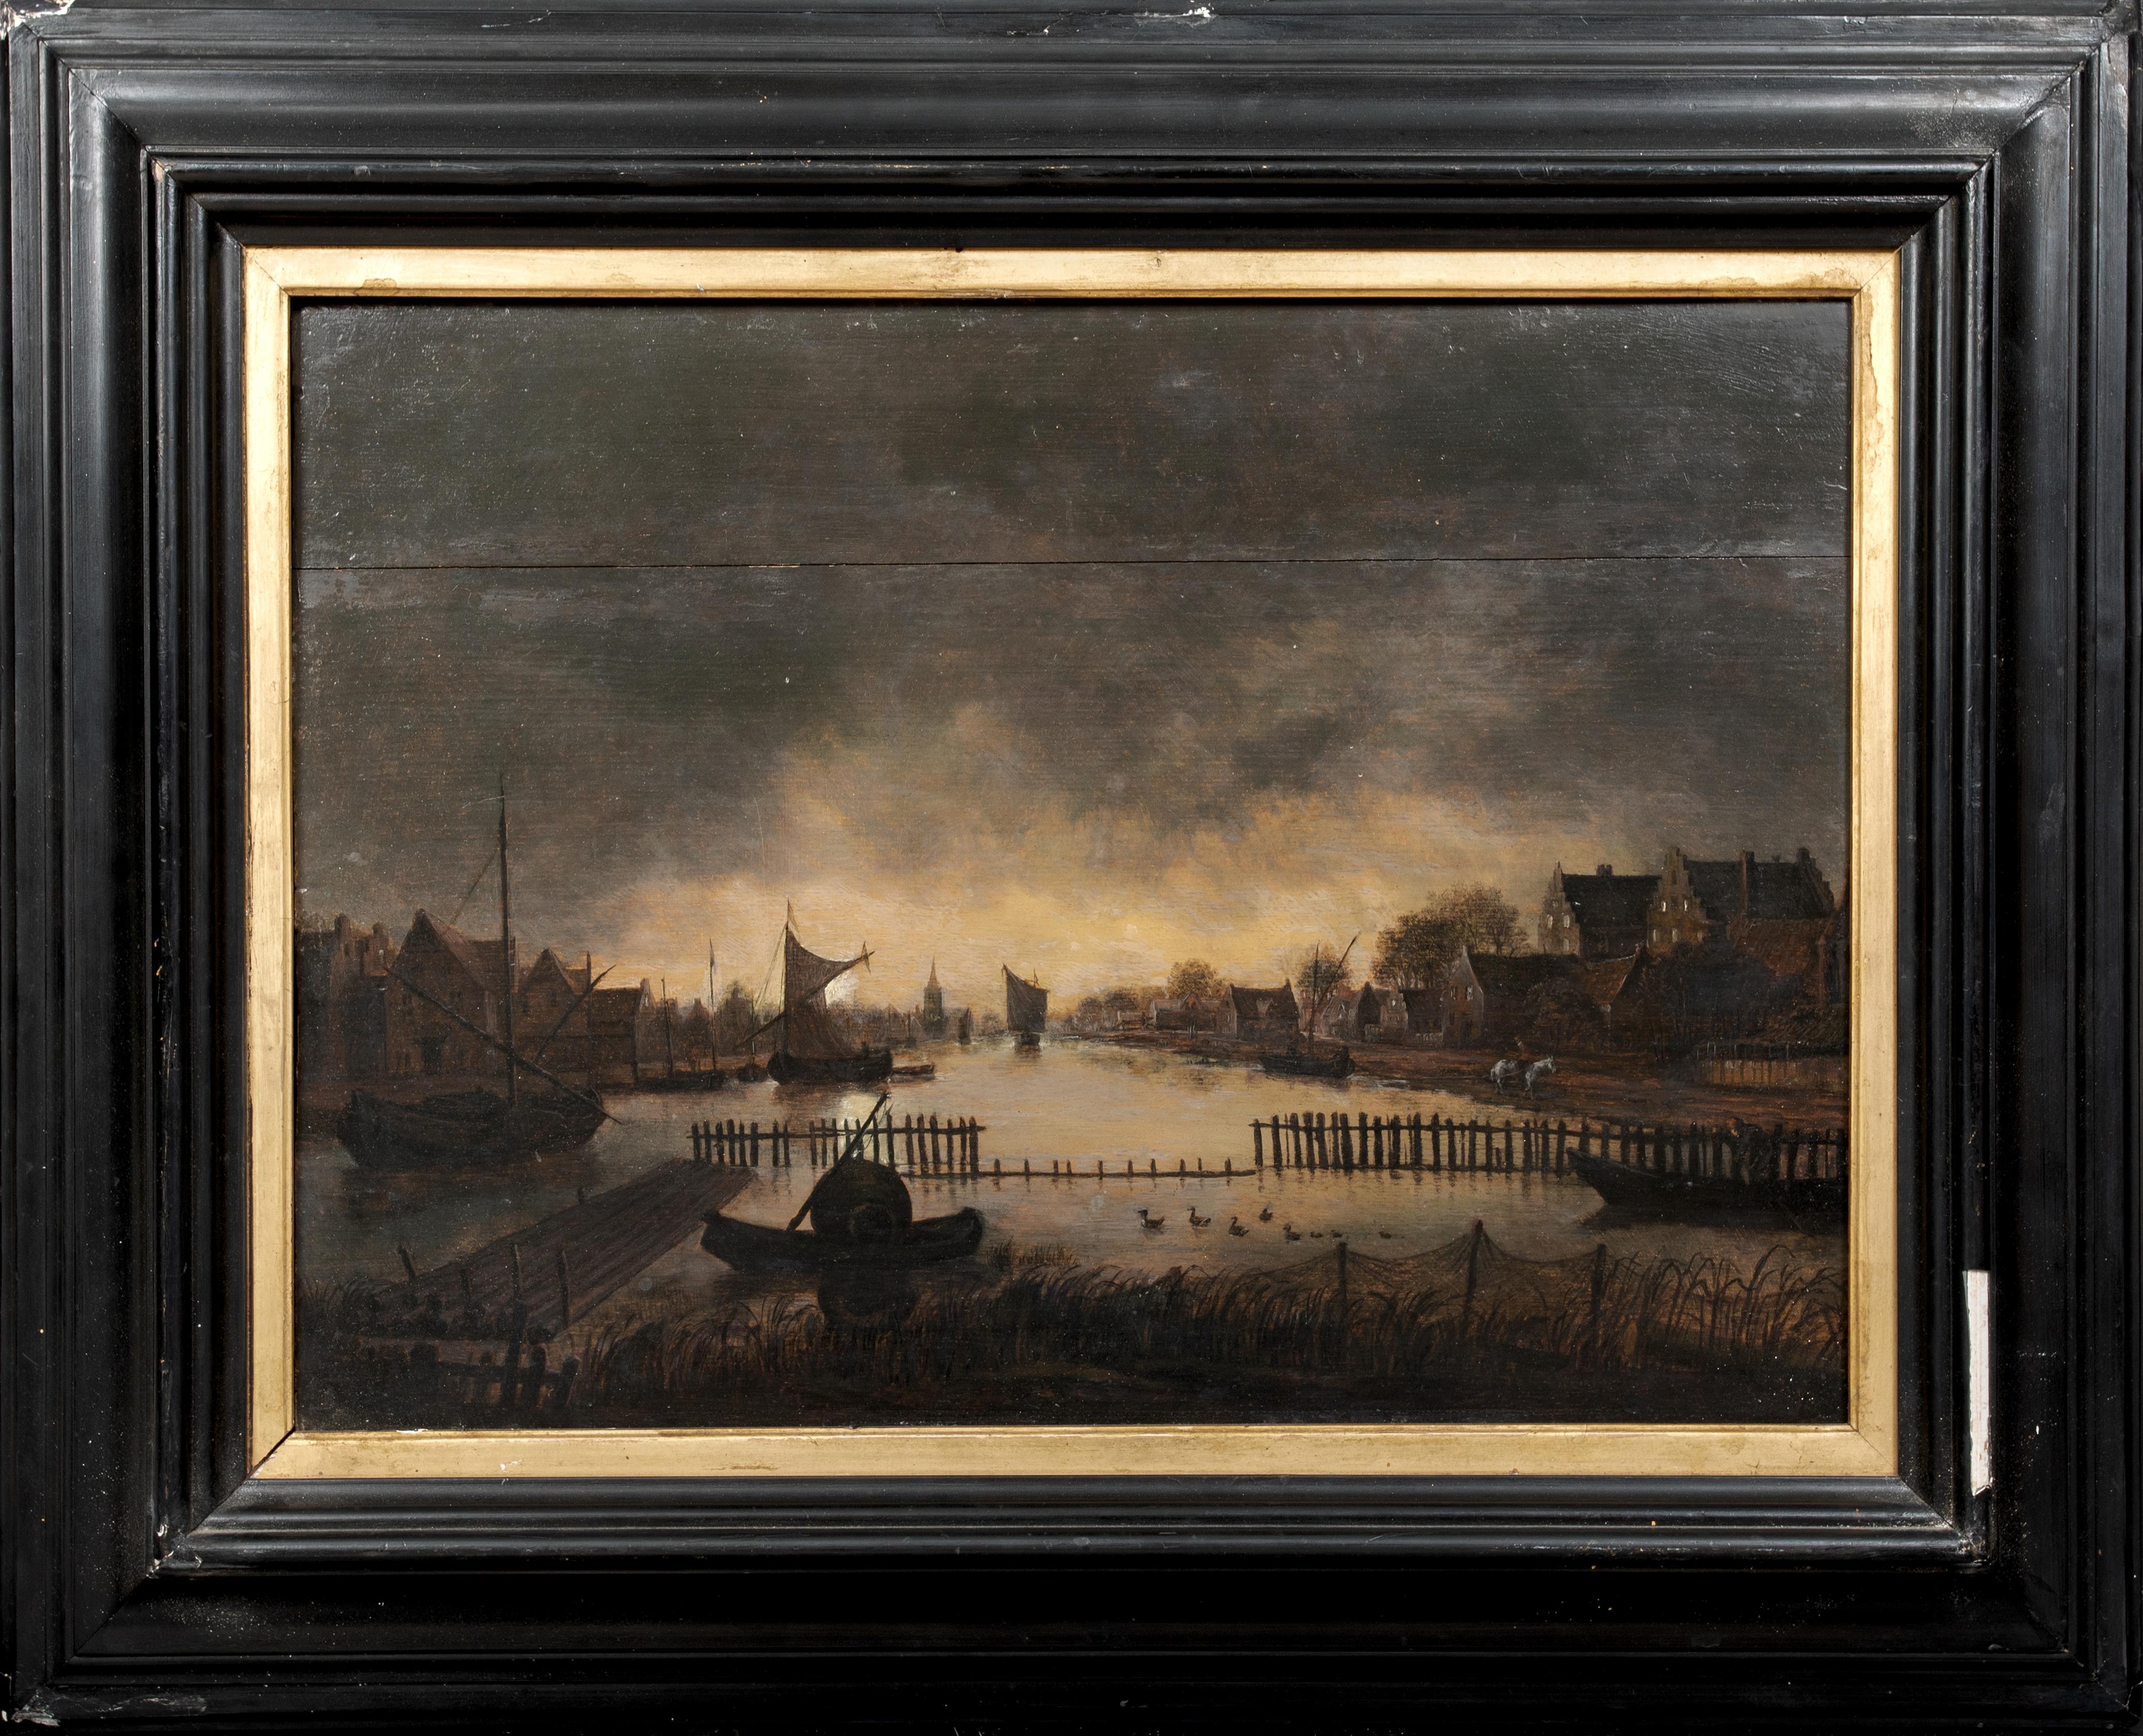 Aert Van Der Neer Landscape Painting - Moonlit River Landscape, 17th Century  Aert van der Neer (1603-1677)